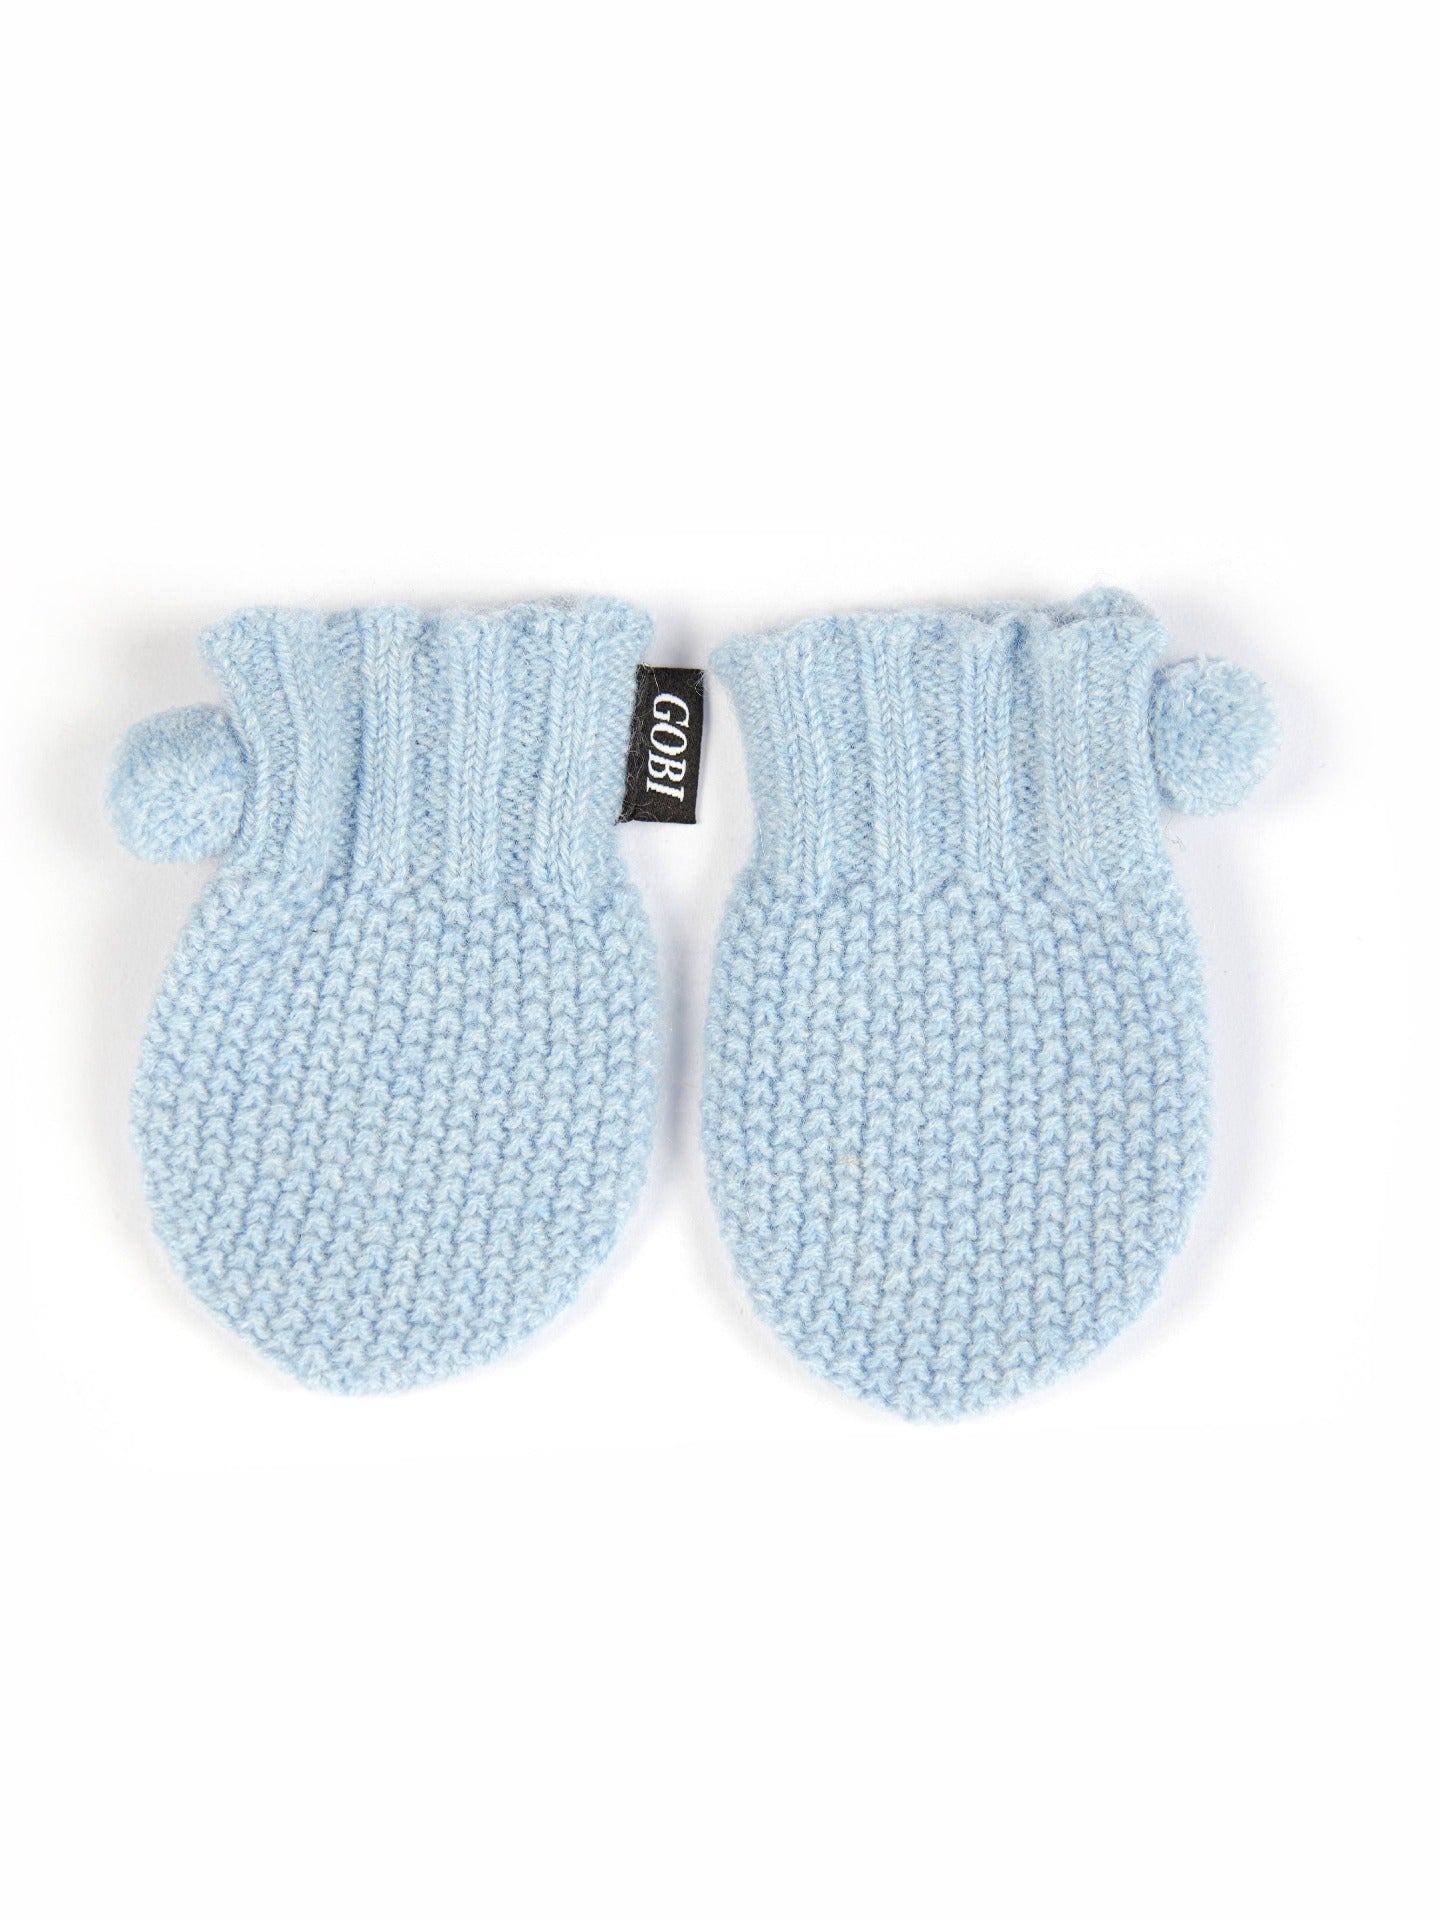 Unisex Cashmere Baby Set Lite Blue - Gobi Cashmere